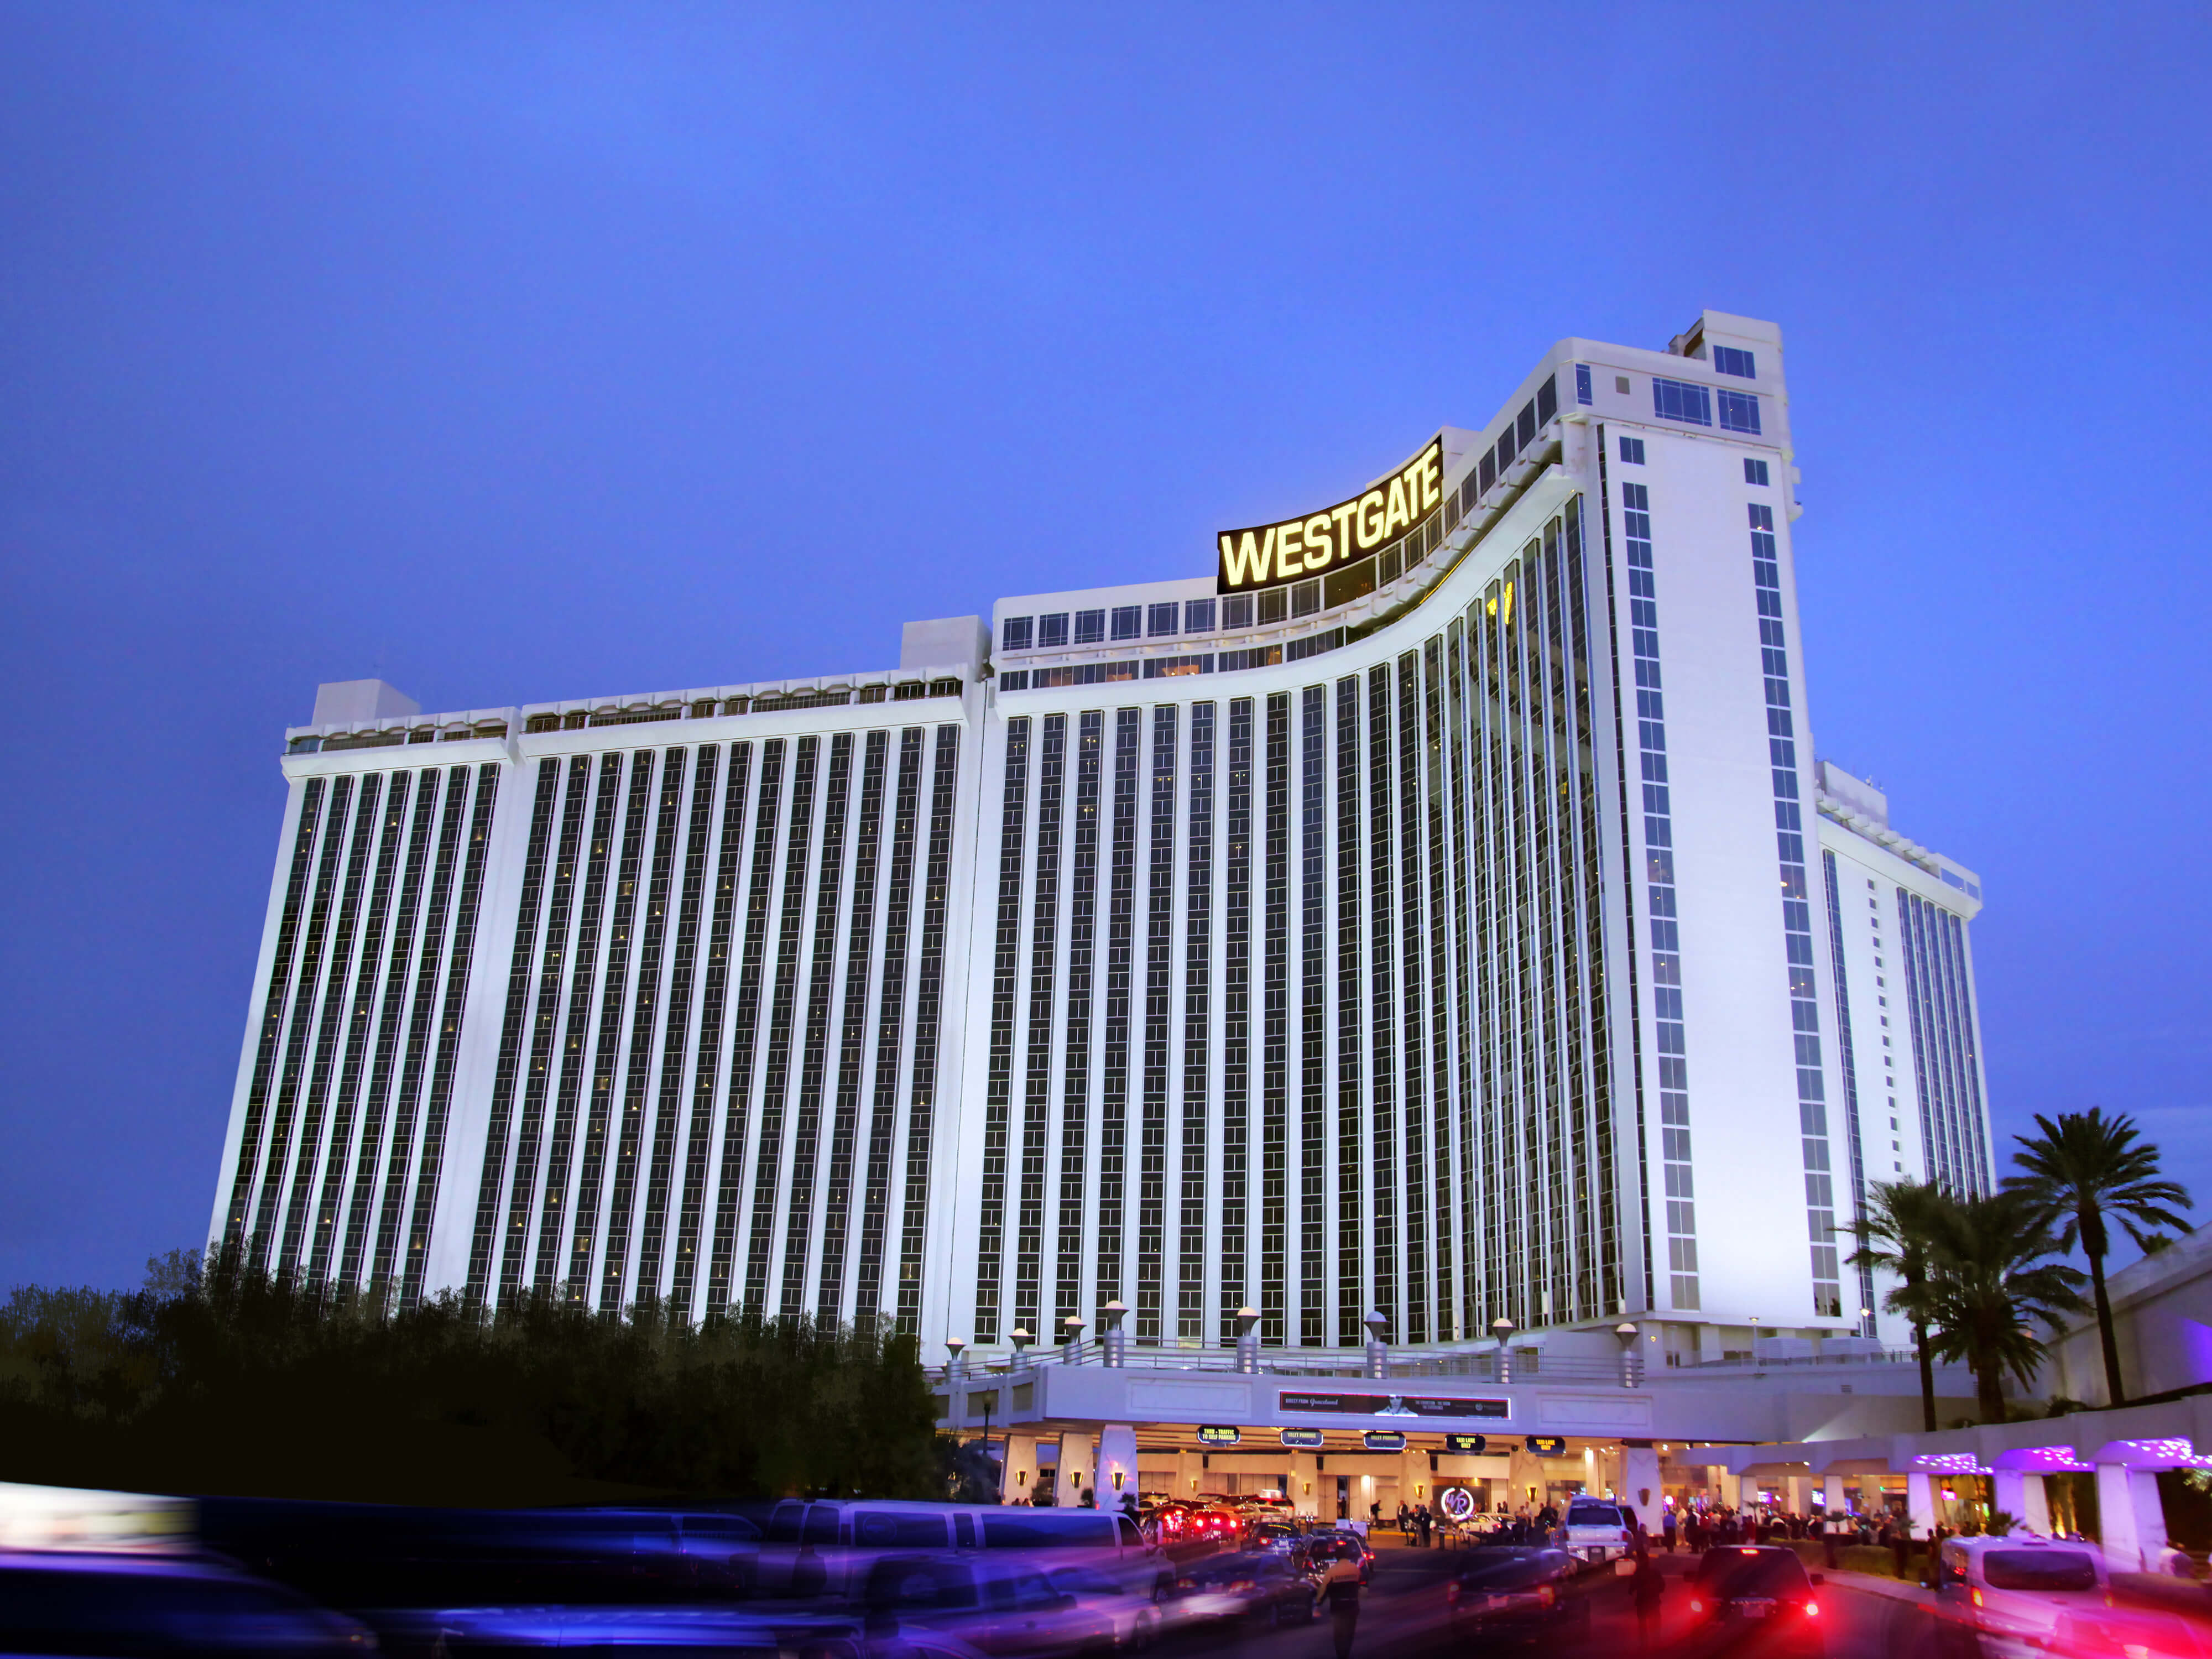 The Westgate Hotel Las Vegas